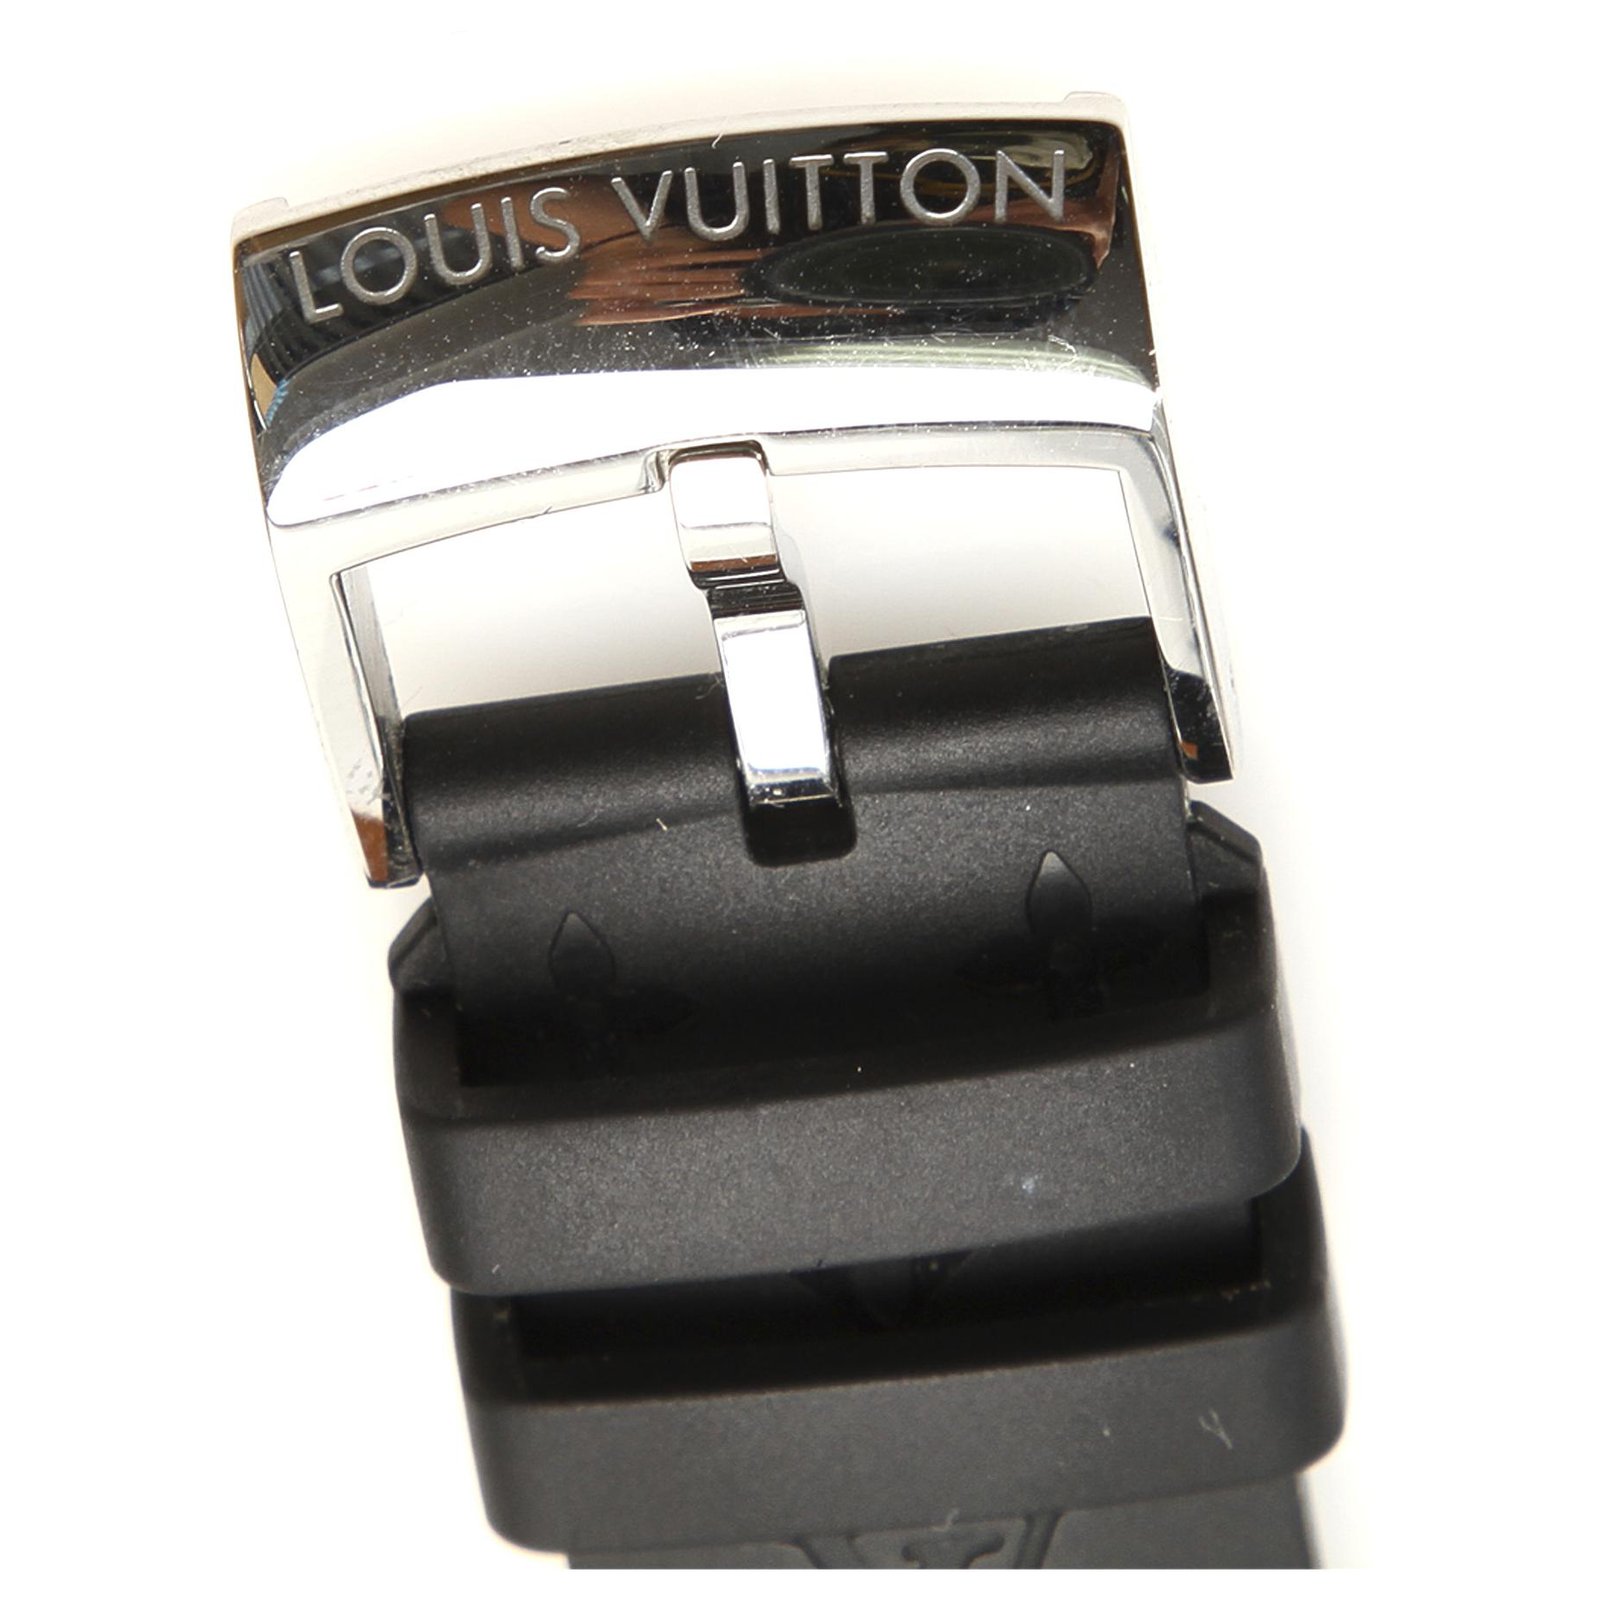 Relojes Louis vuitton Negro de en Acero - 25280221